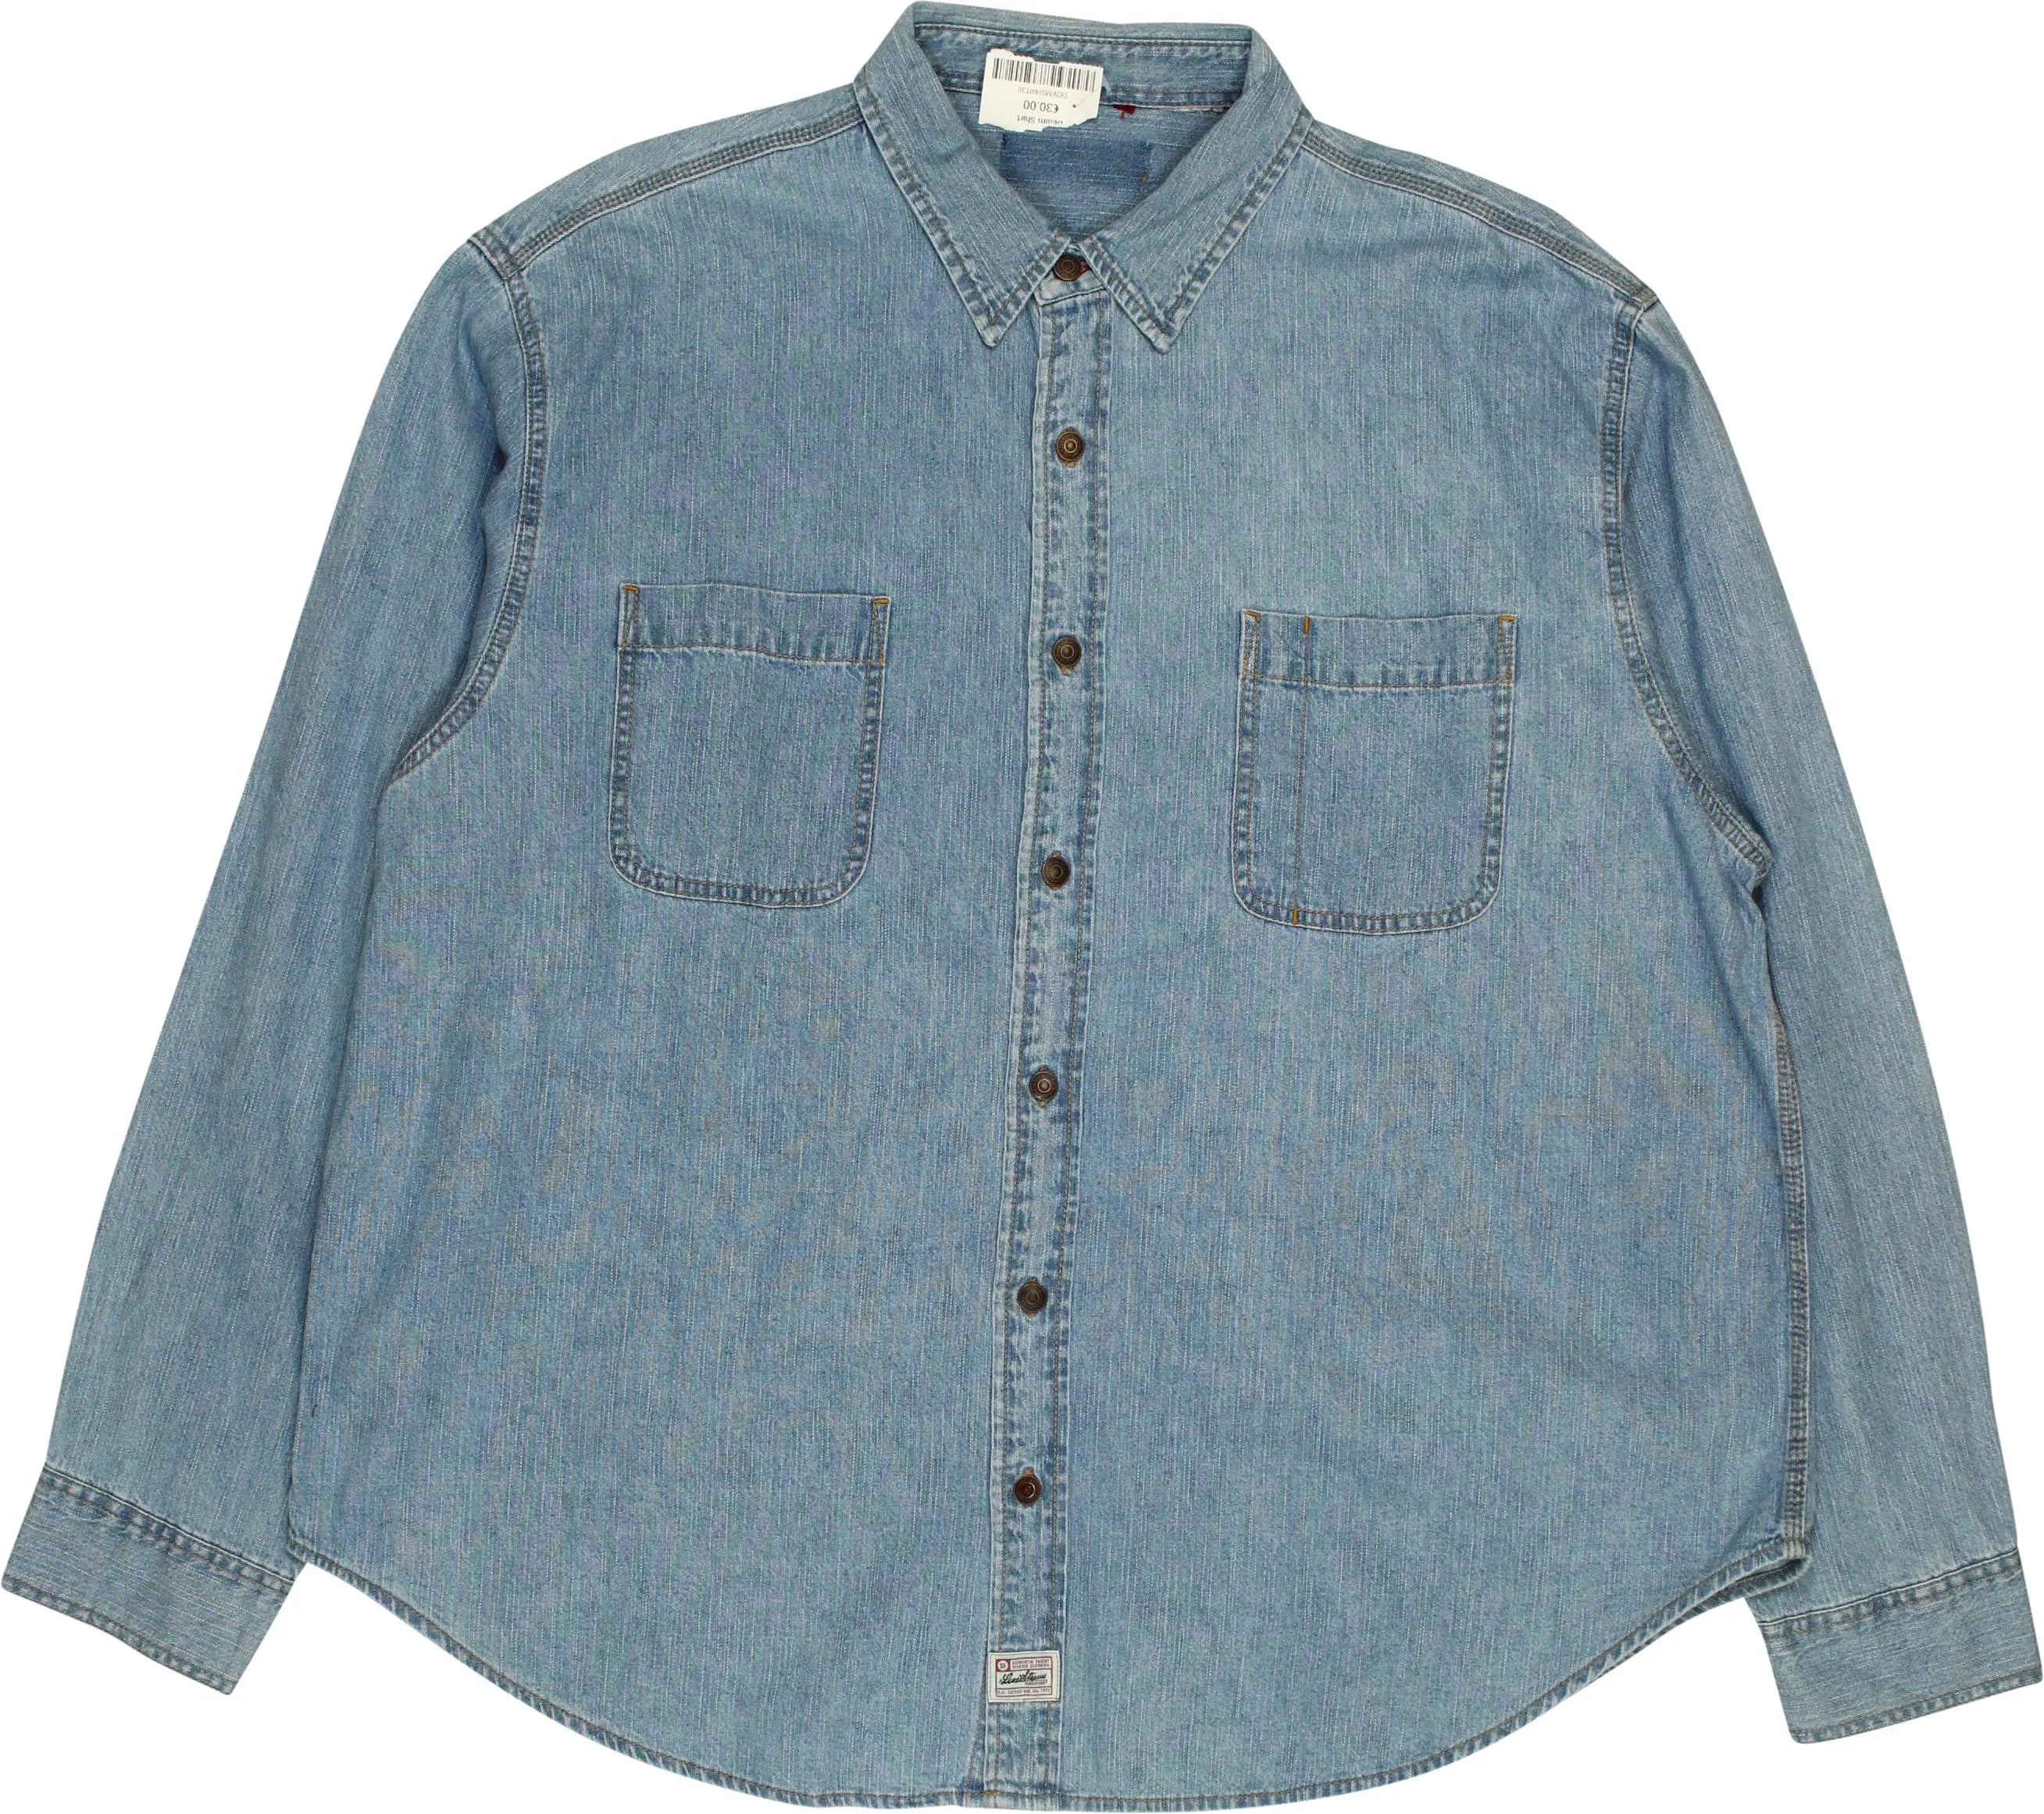 Levi's - Denim Shirt- ThriftTale.com - Vintage and second handclothing